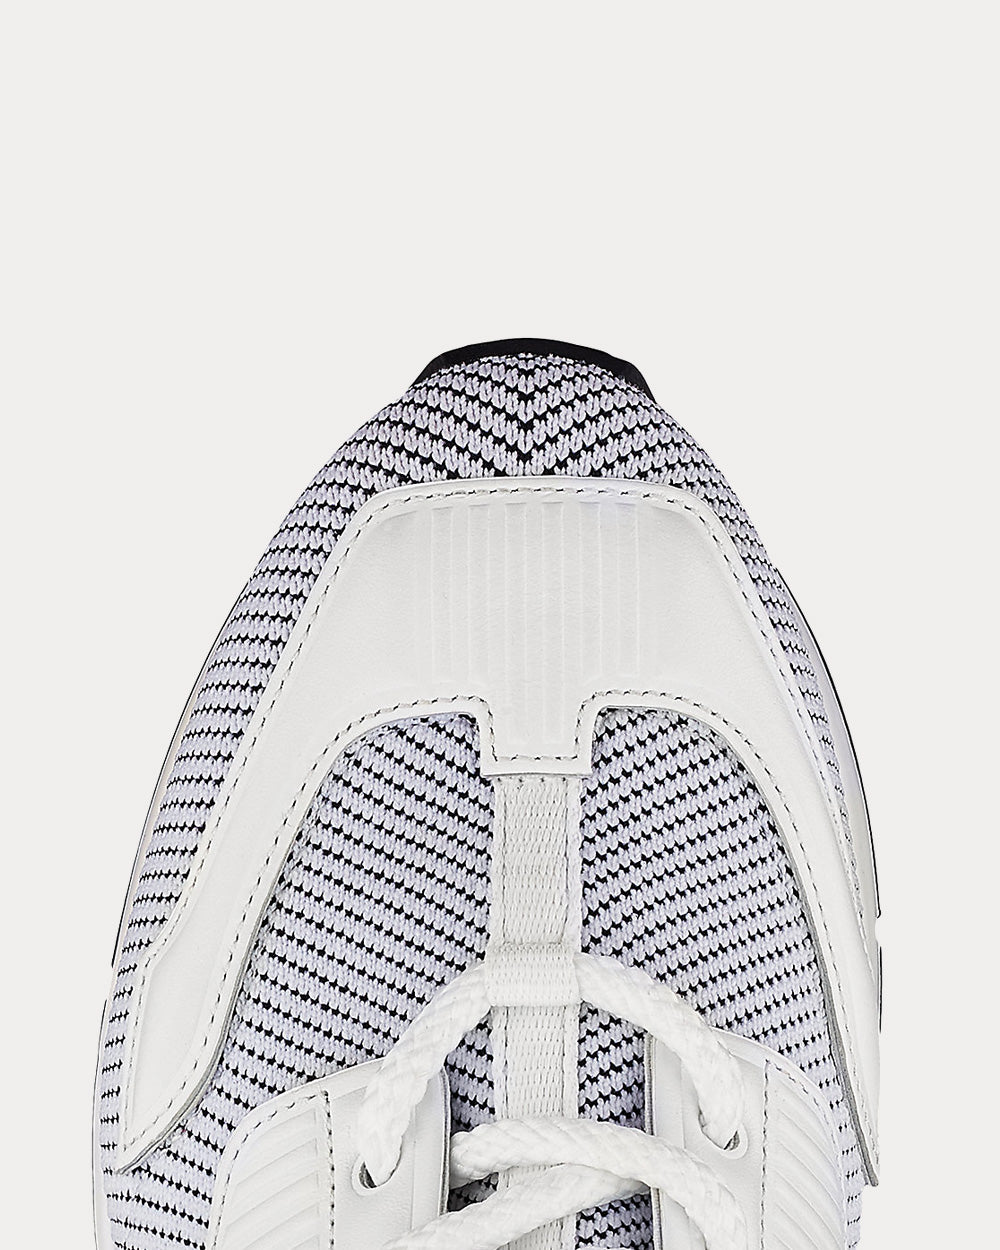 Hermès - Athlete Multicolore Blanc Low Top Sneakers